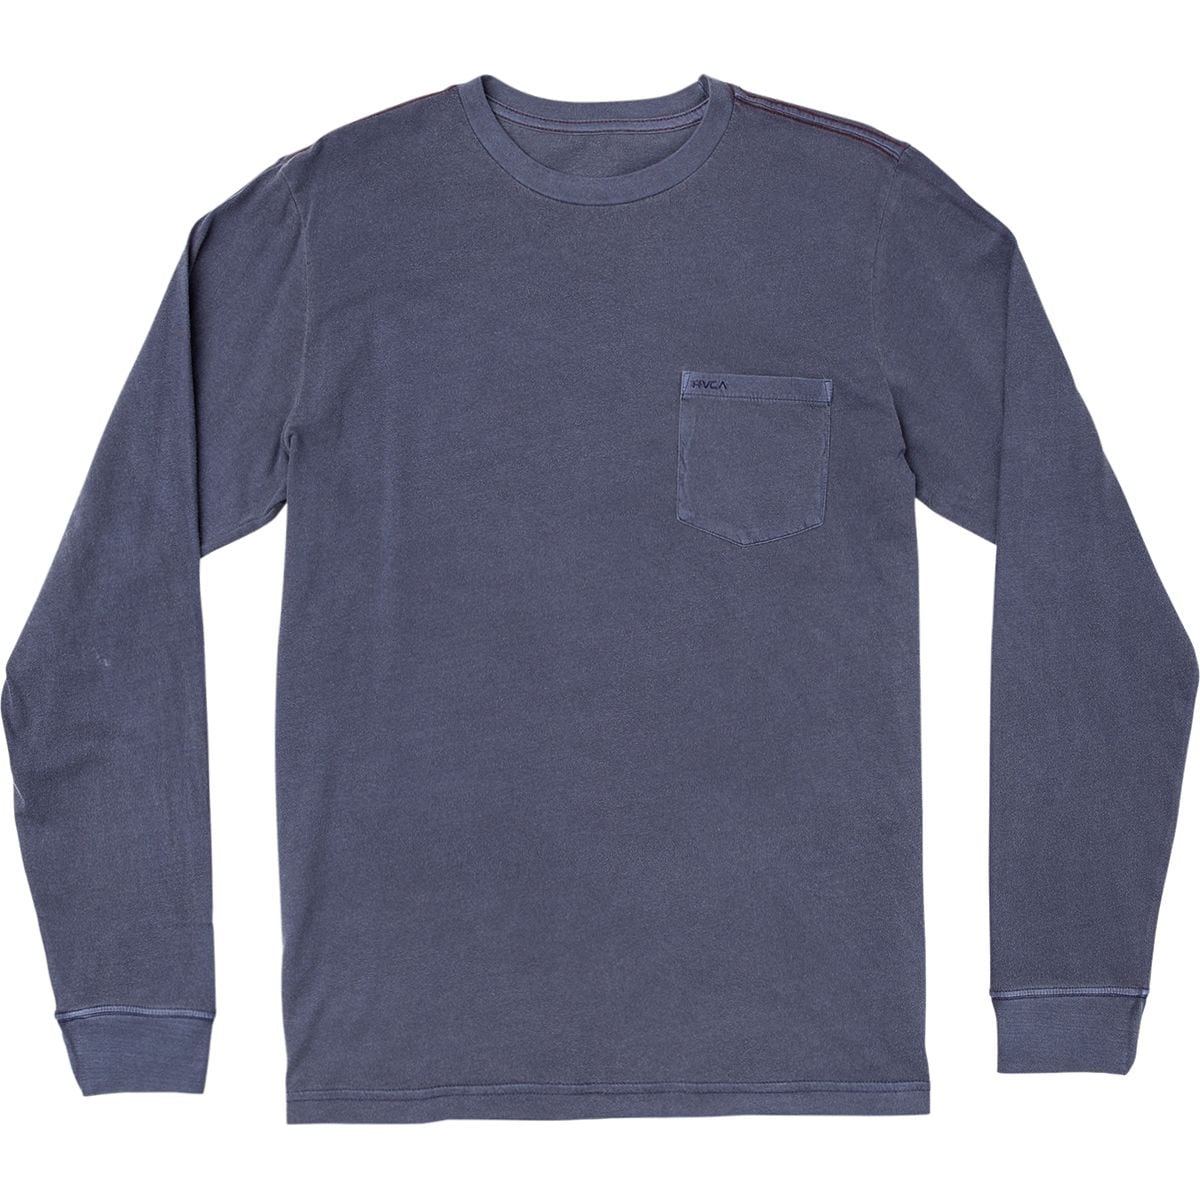 RVCA PTC Pigment Long-Sleeve Shirt - Men's